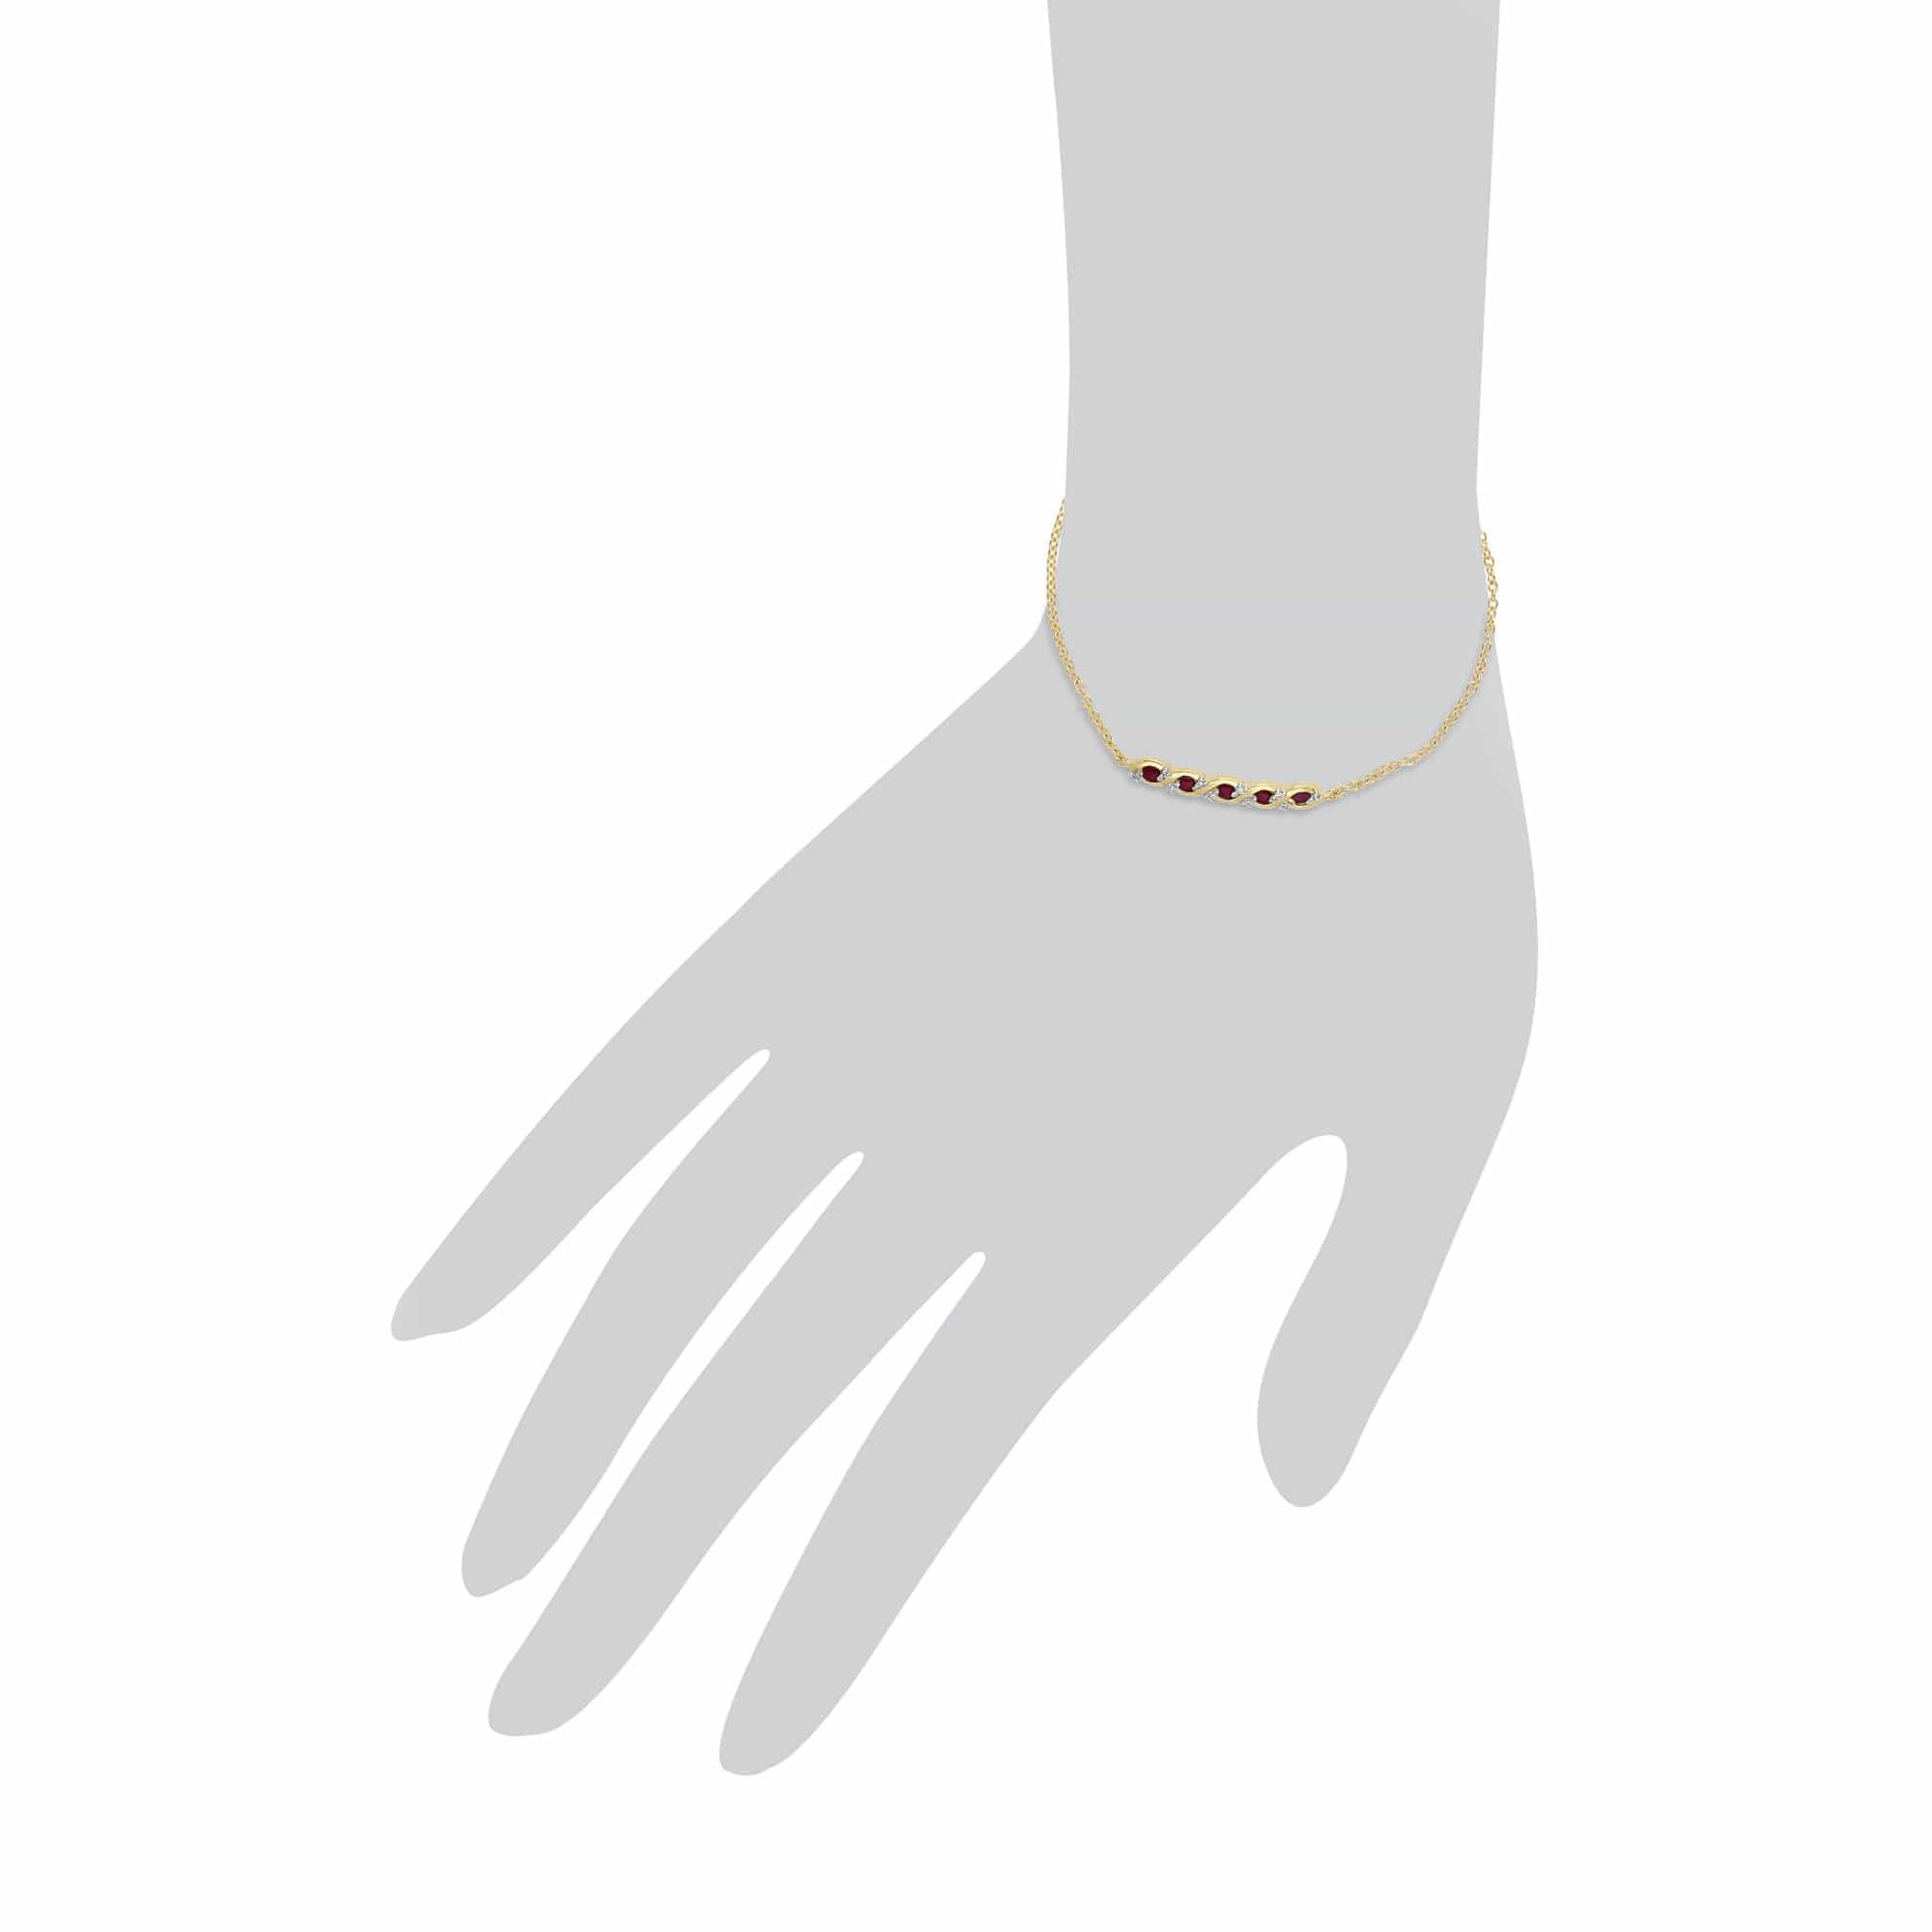 Classic Style Five Ruby & Diamond Twisted Bracelet in 9ct Yellow Gold - Gemondo